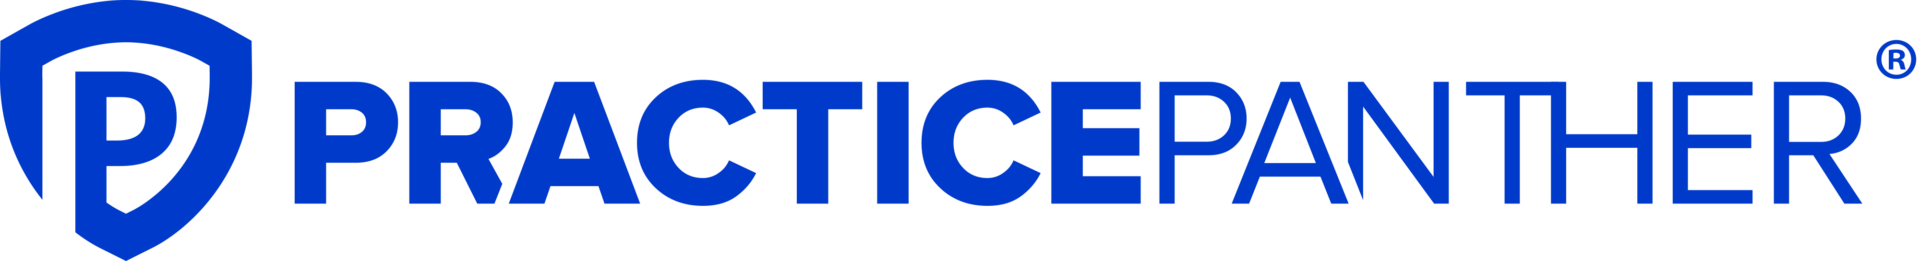 Blue PP logo HIRES